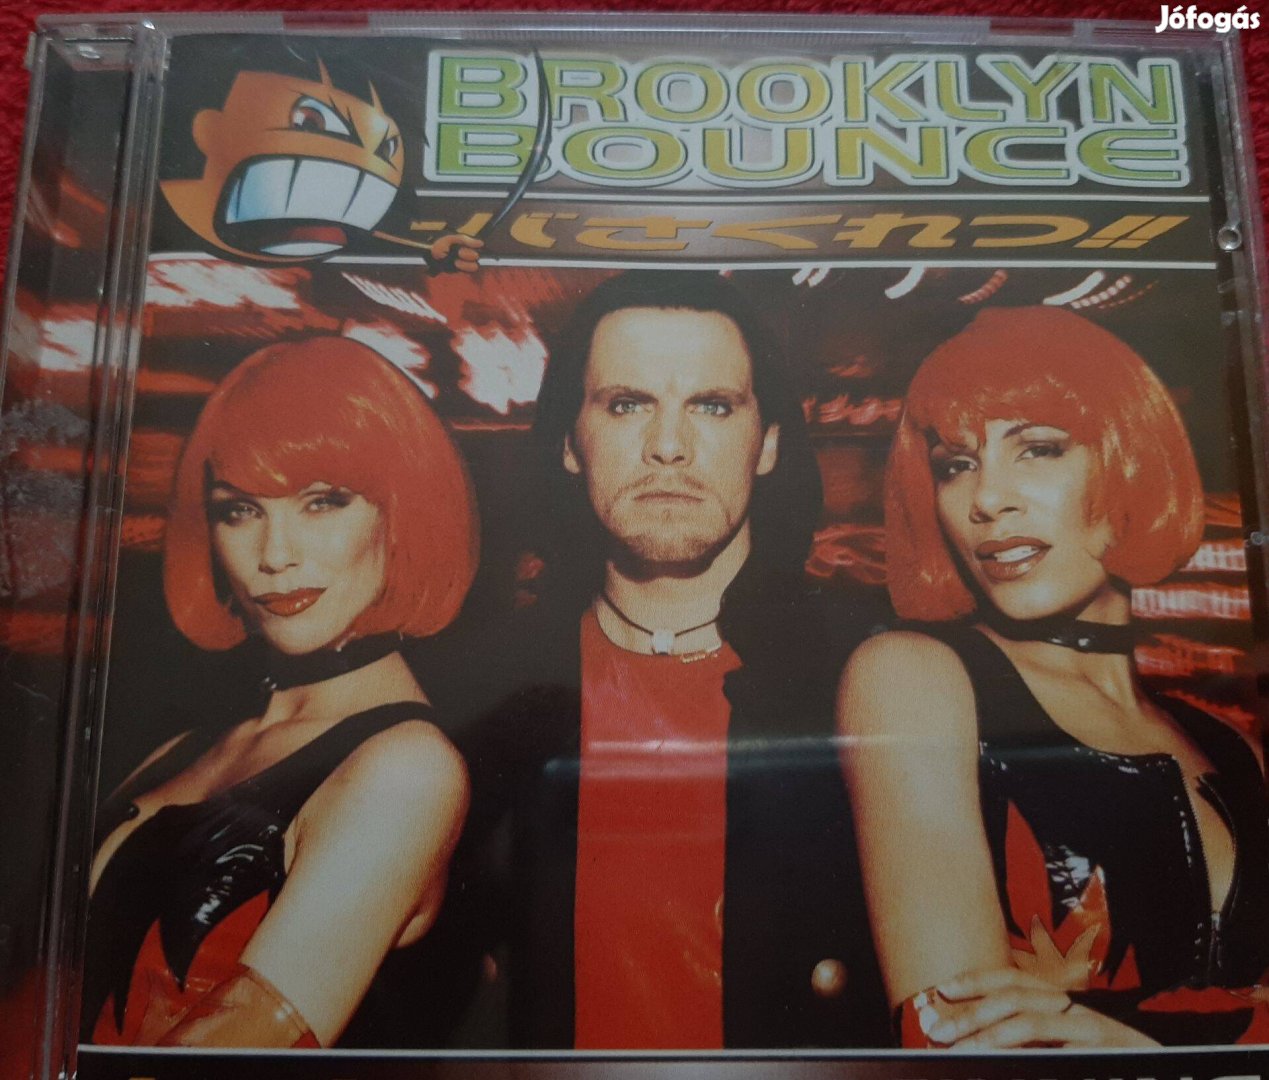 Brooklyn Bounce The beginning CD